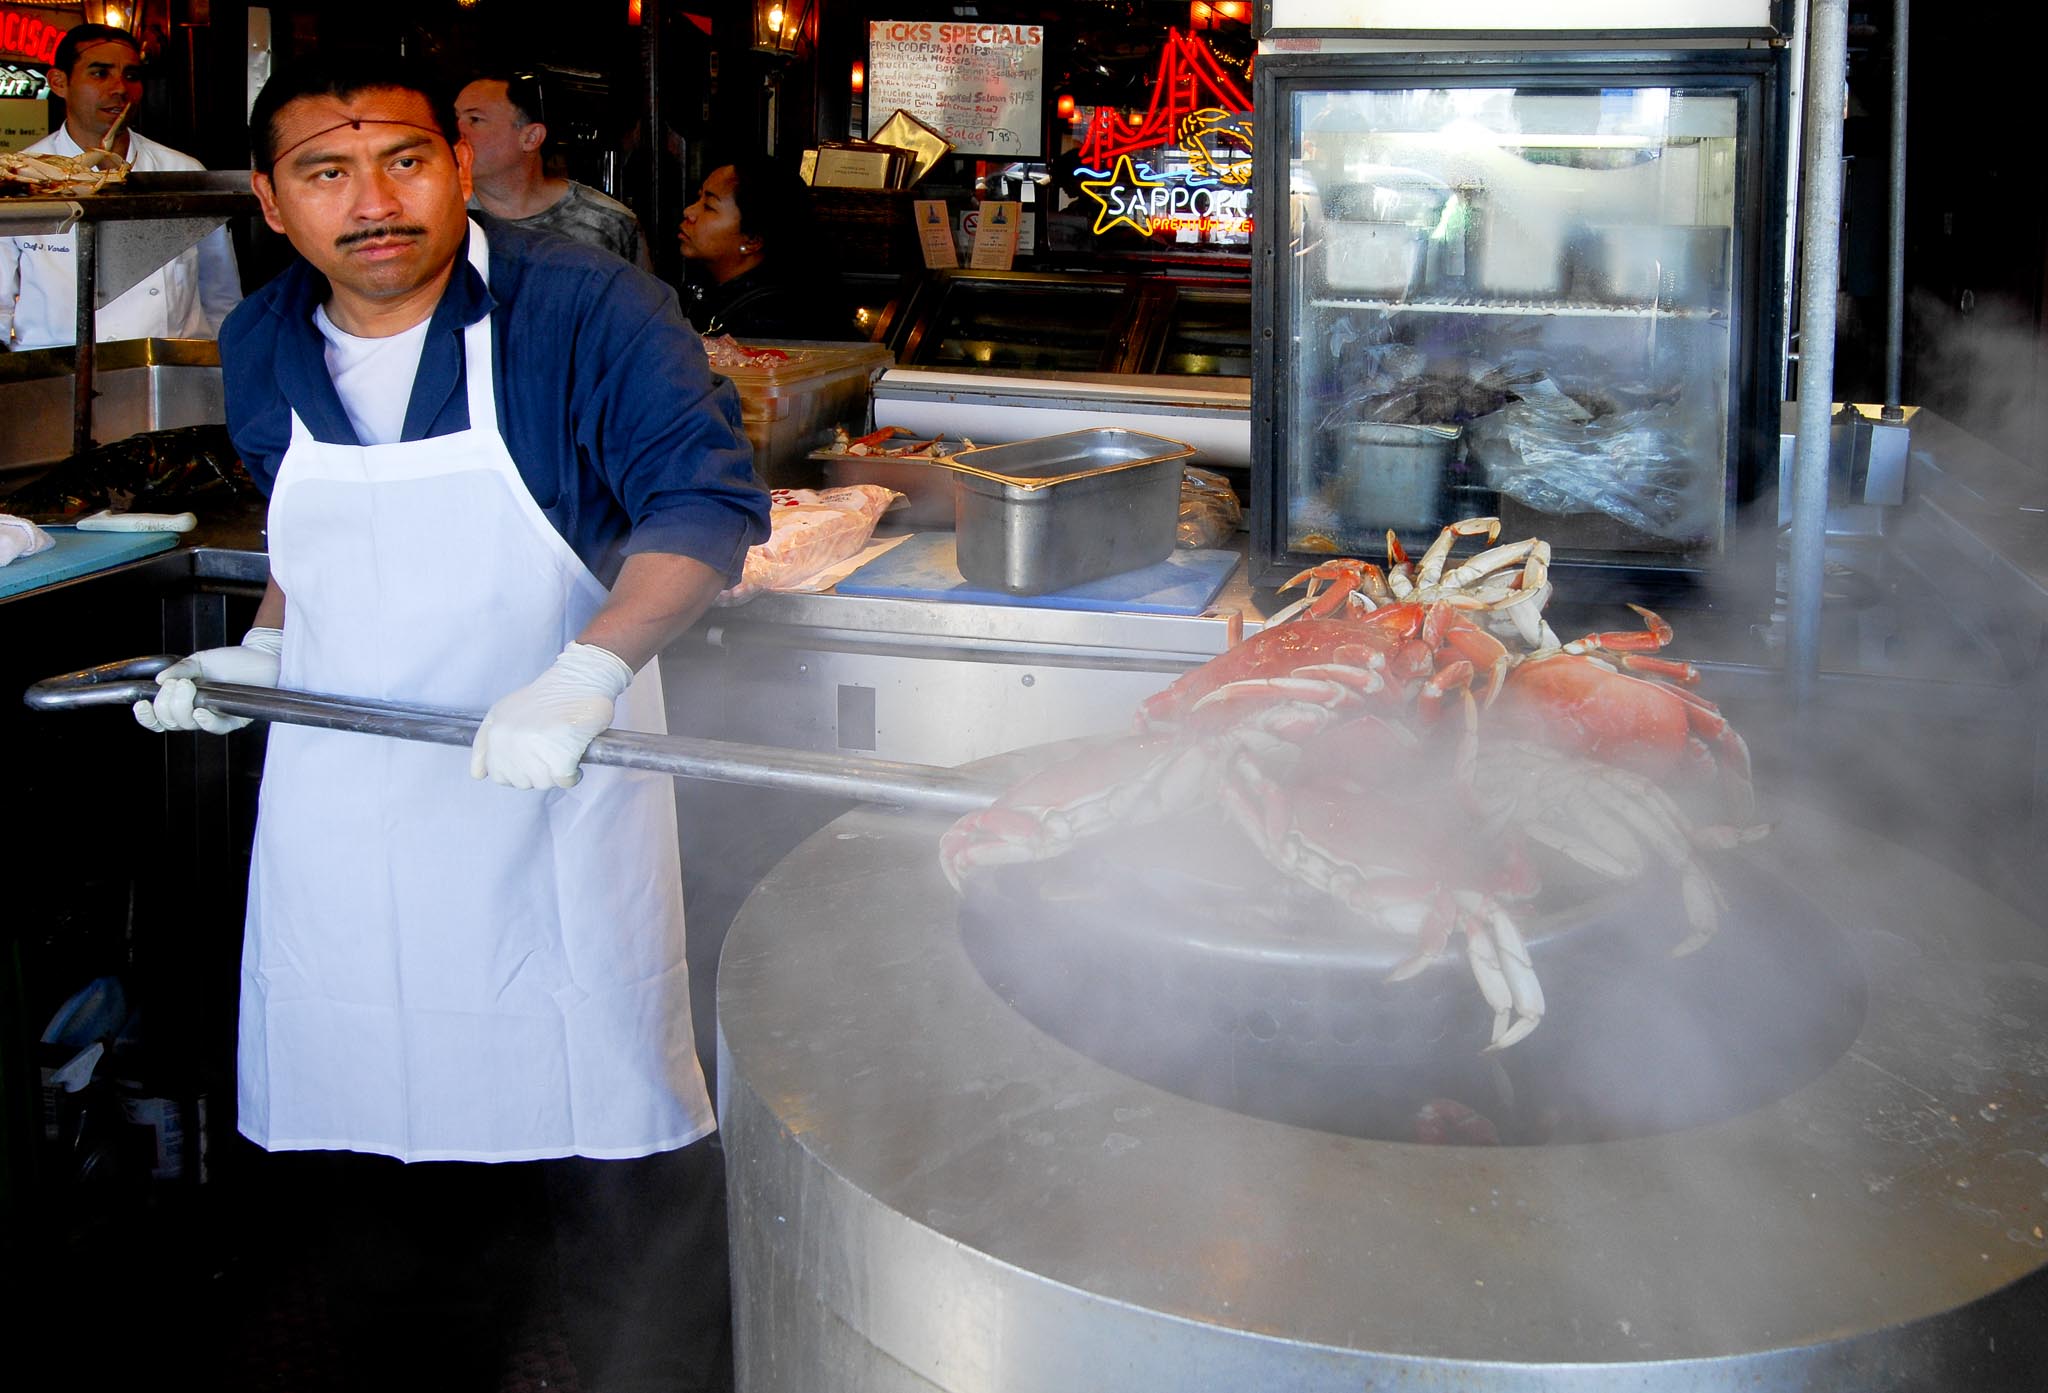 Crab cook, Fisherman's Wharf, San Francisco, USA